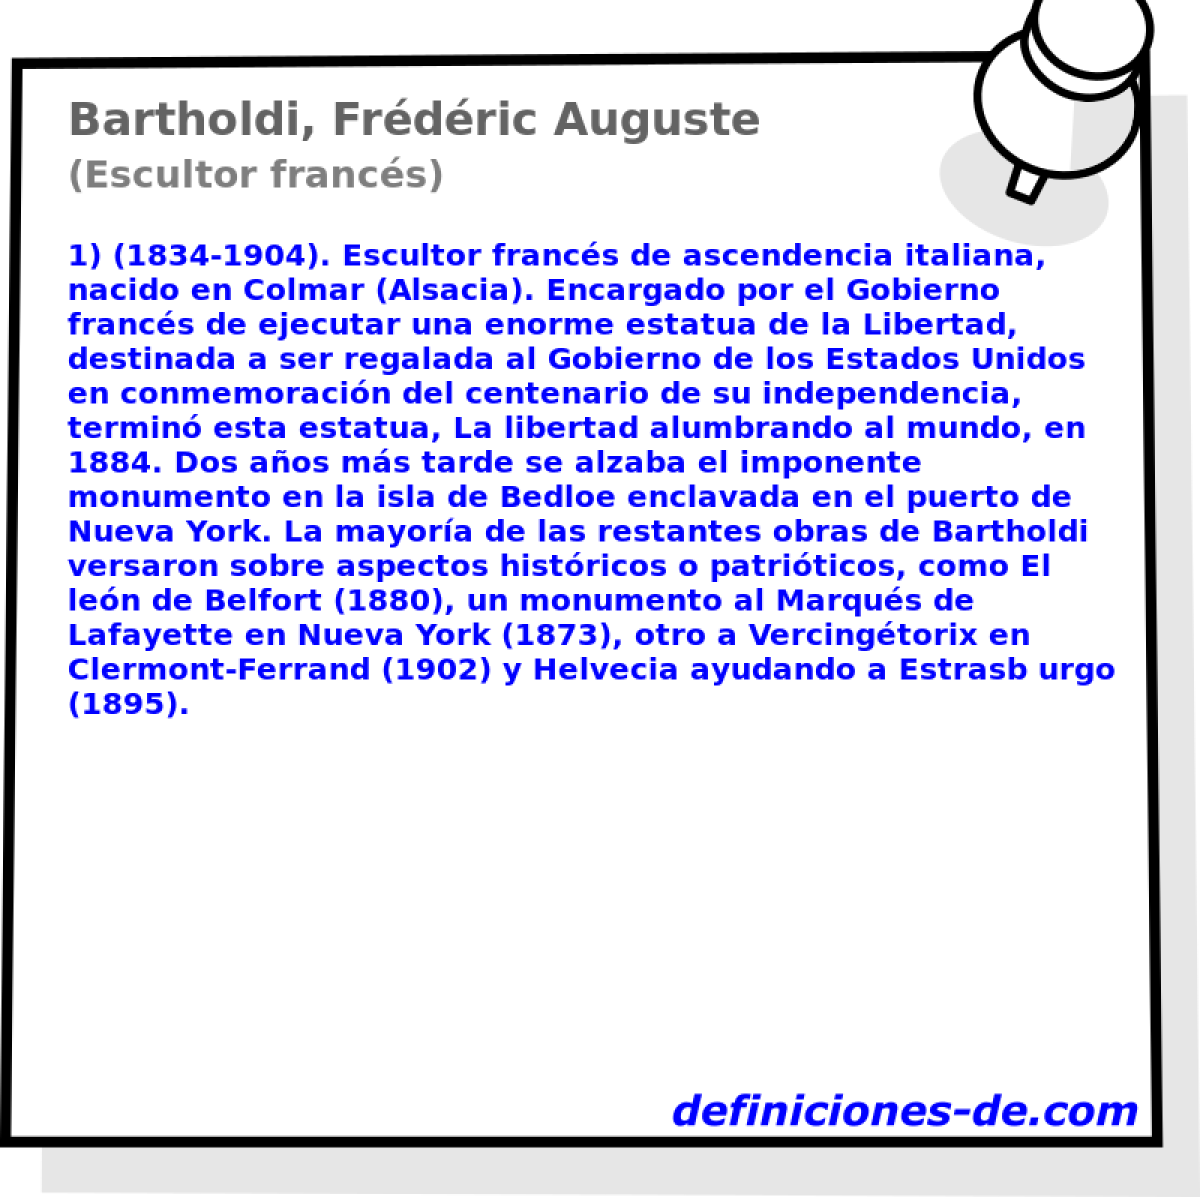 Bartholdi, Frdric Auguste (Escultor francs)